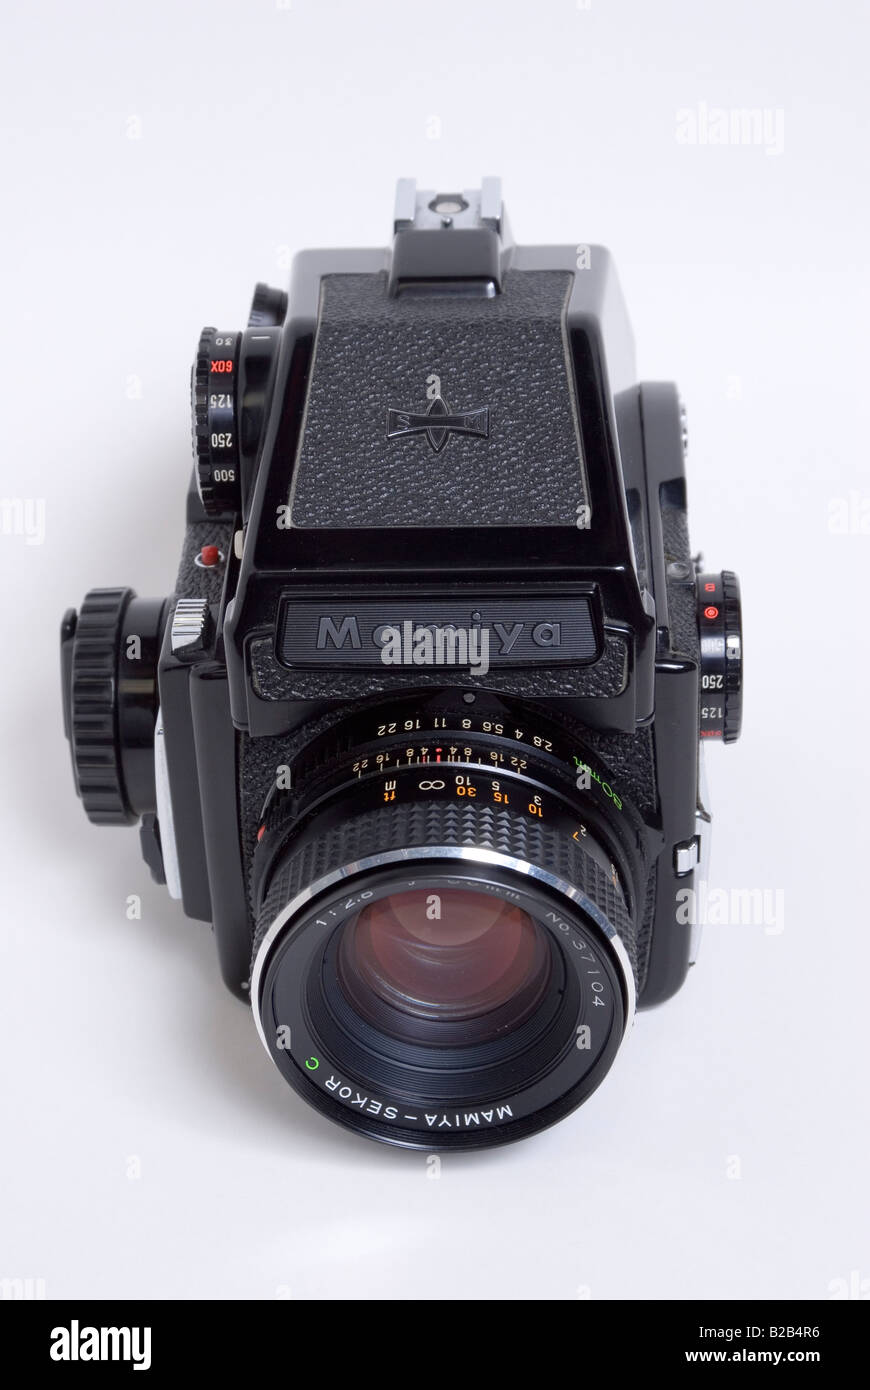 Mamiya M645 Medium Format Film Camera With Standard 80mm Lens Attatched Stock Photo